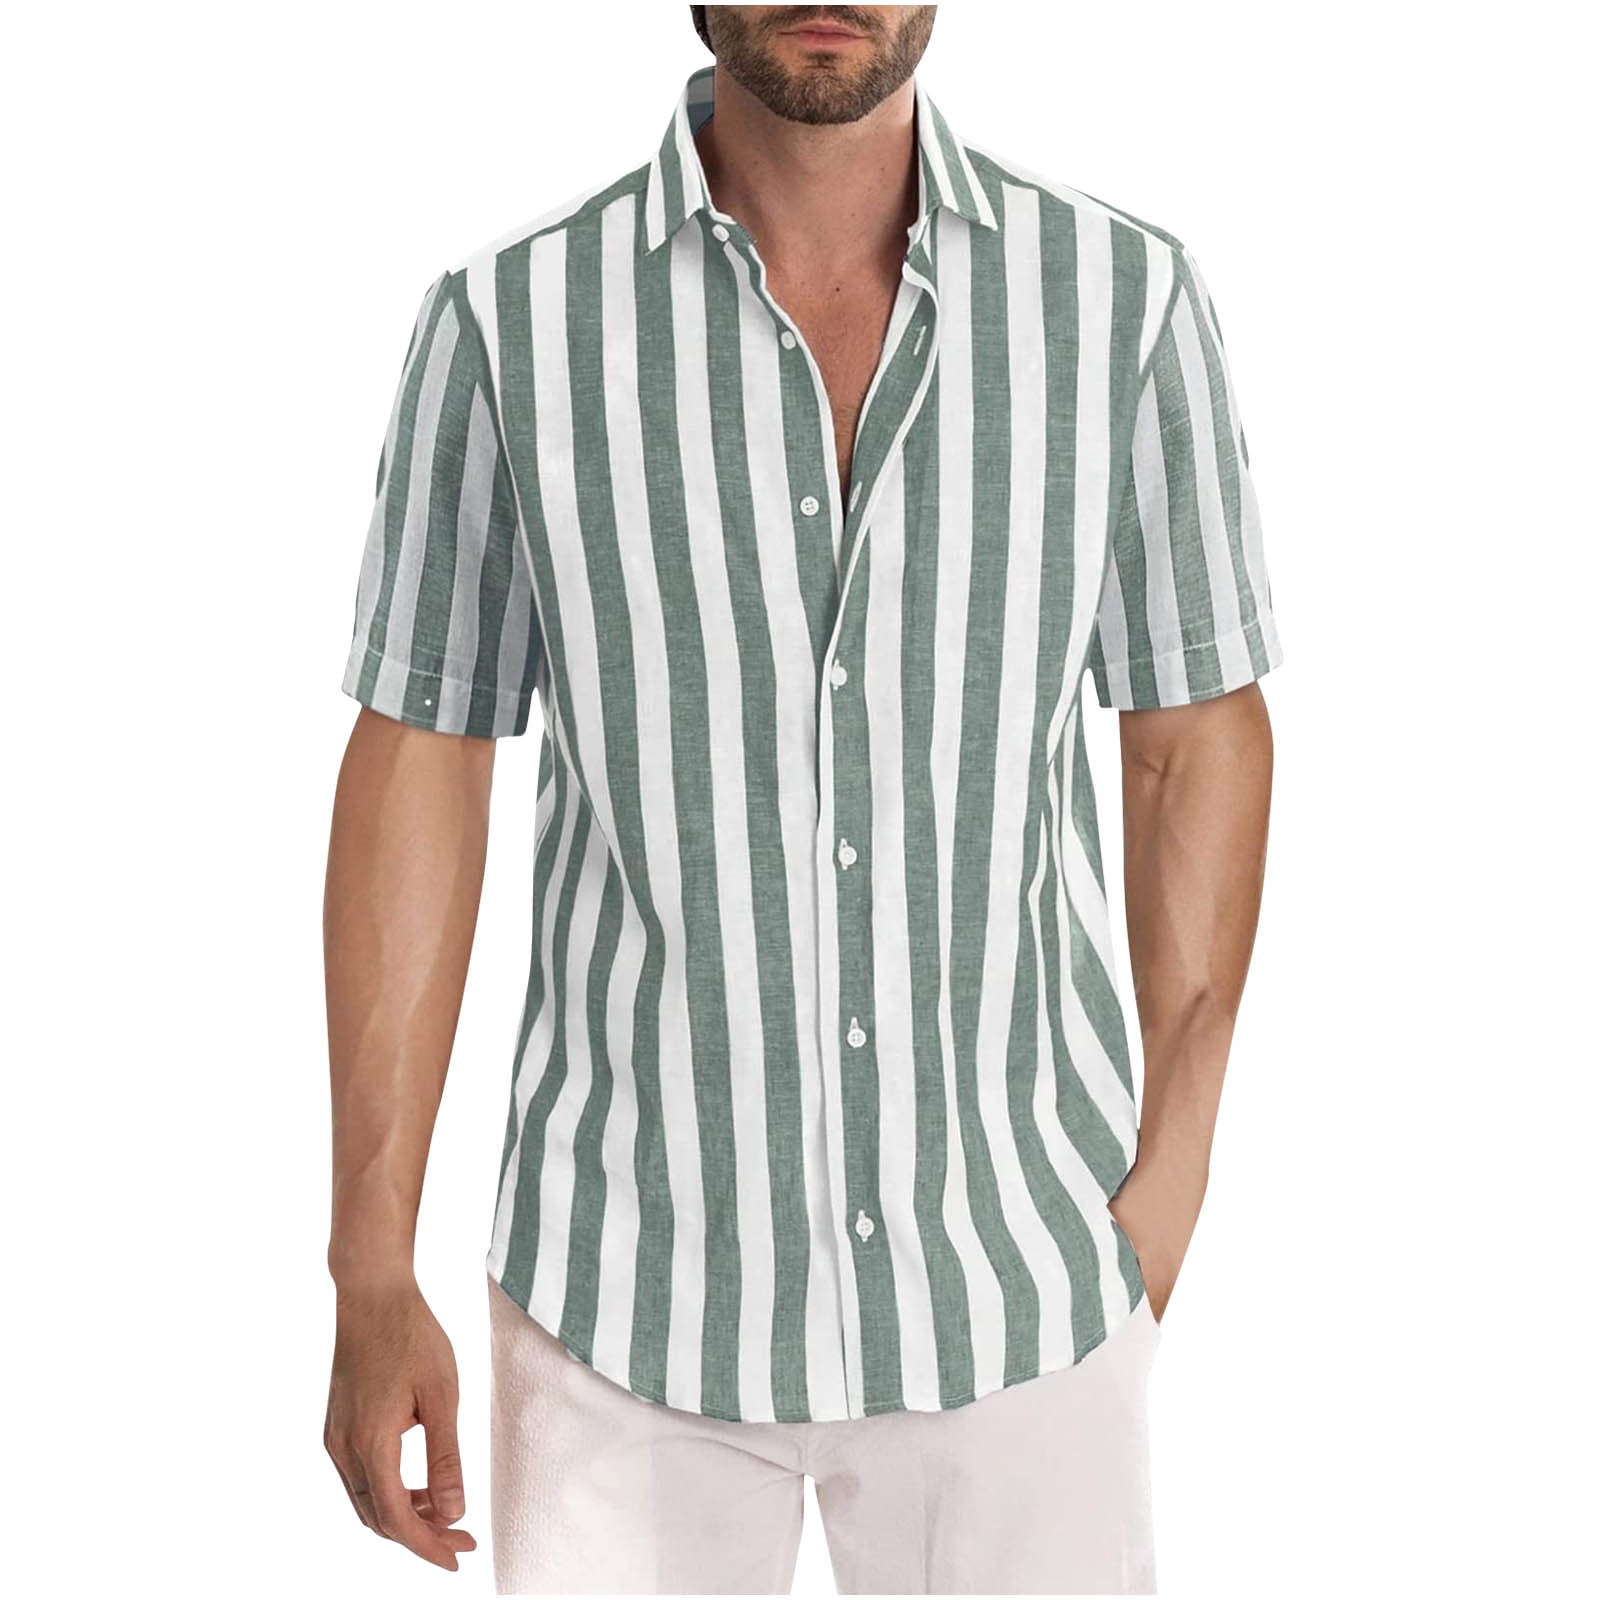 YYDGH Mens Dress Shirts Short Sleeve Button Up Shirts Business Casual Button  Down Shirt Green M 